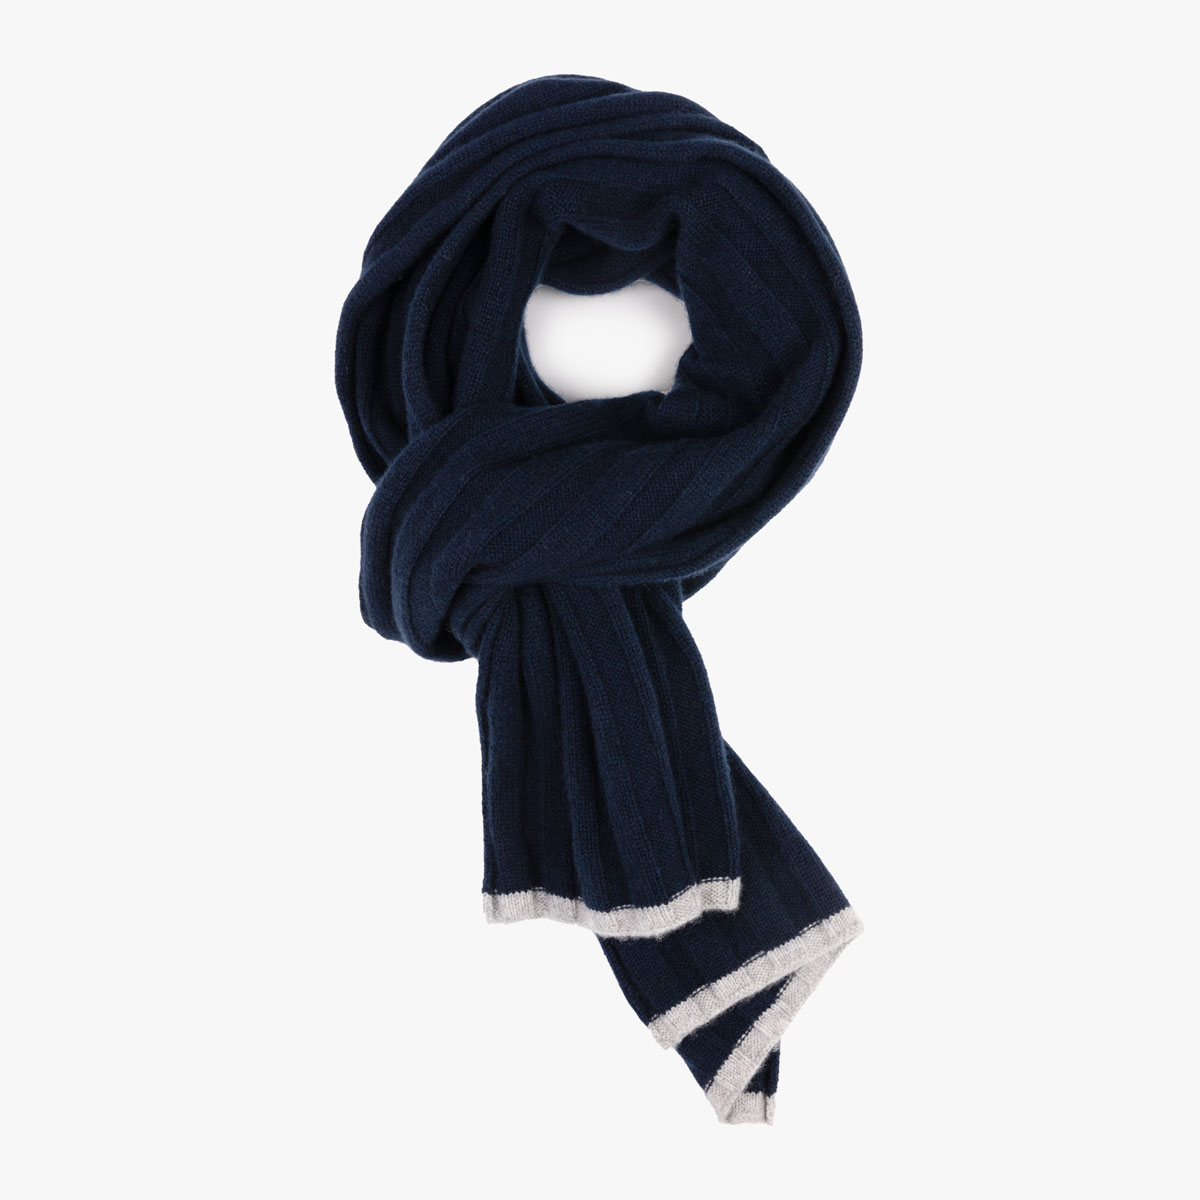 Schal aus Kaschmir in dunkelblau